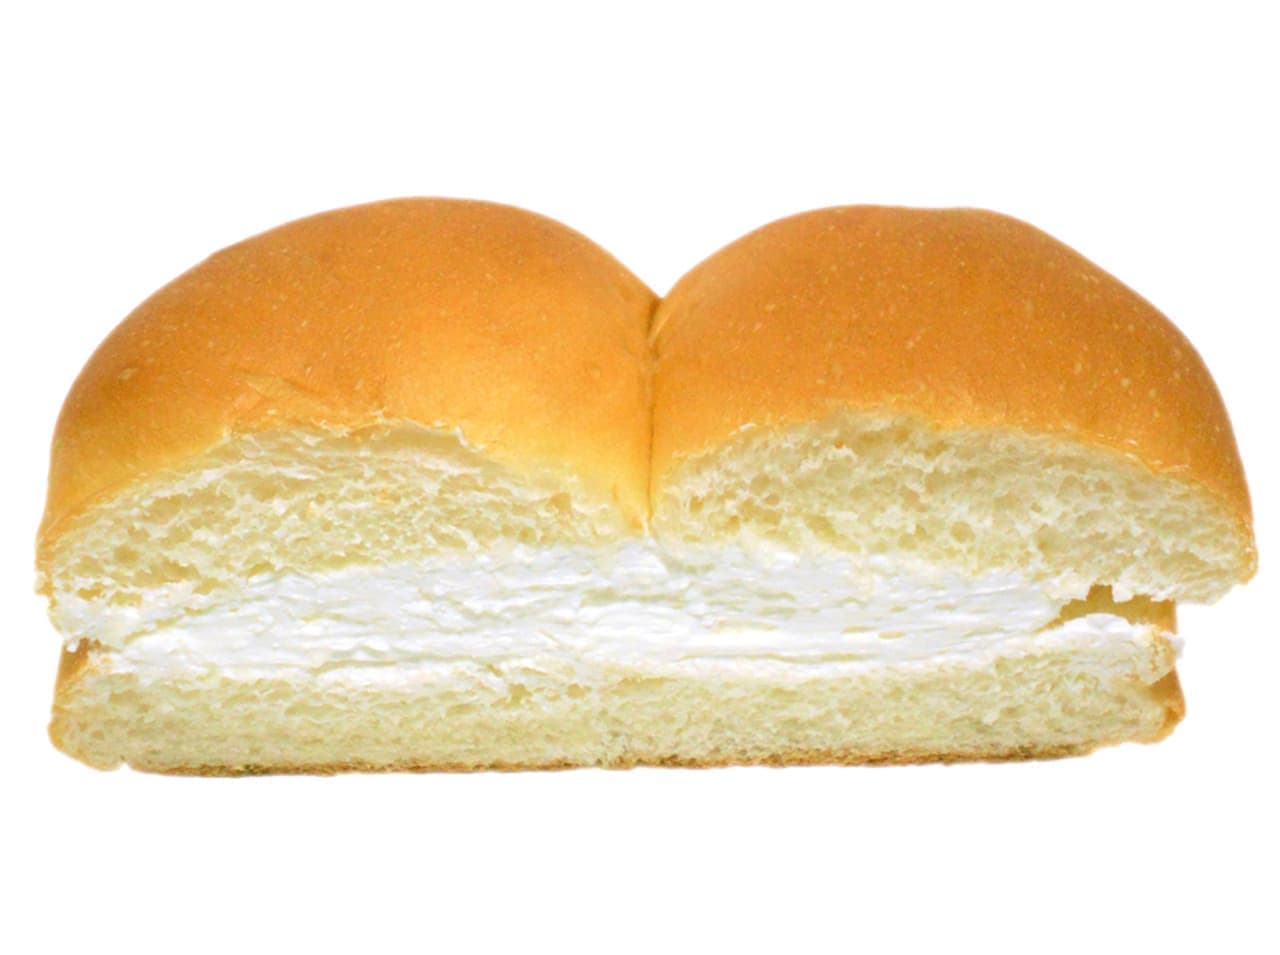 7-ELEVEN "Haruna Milk Milk Bread